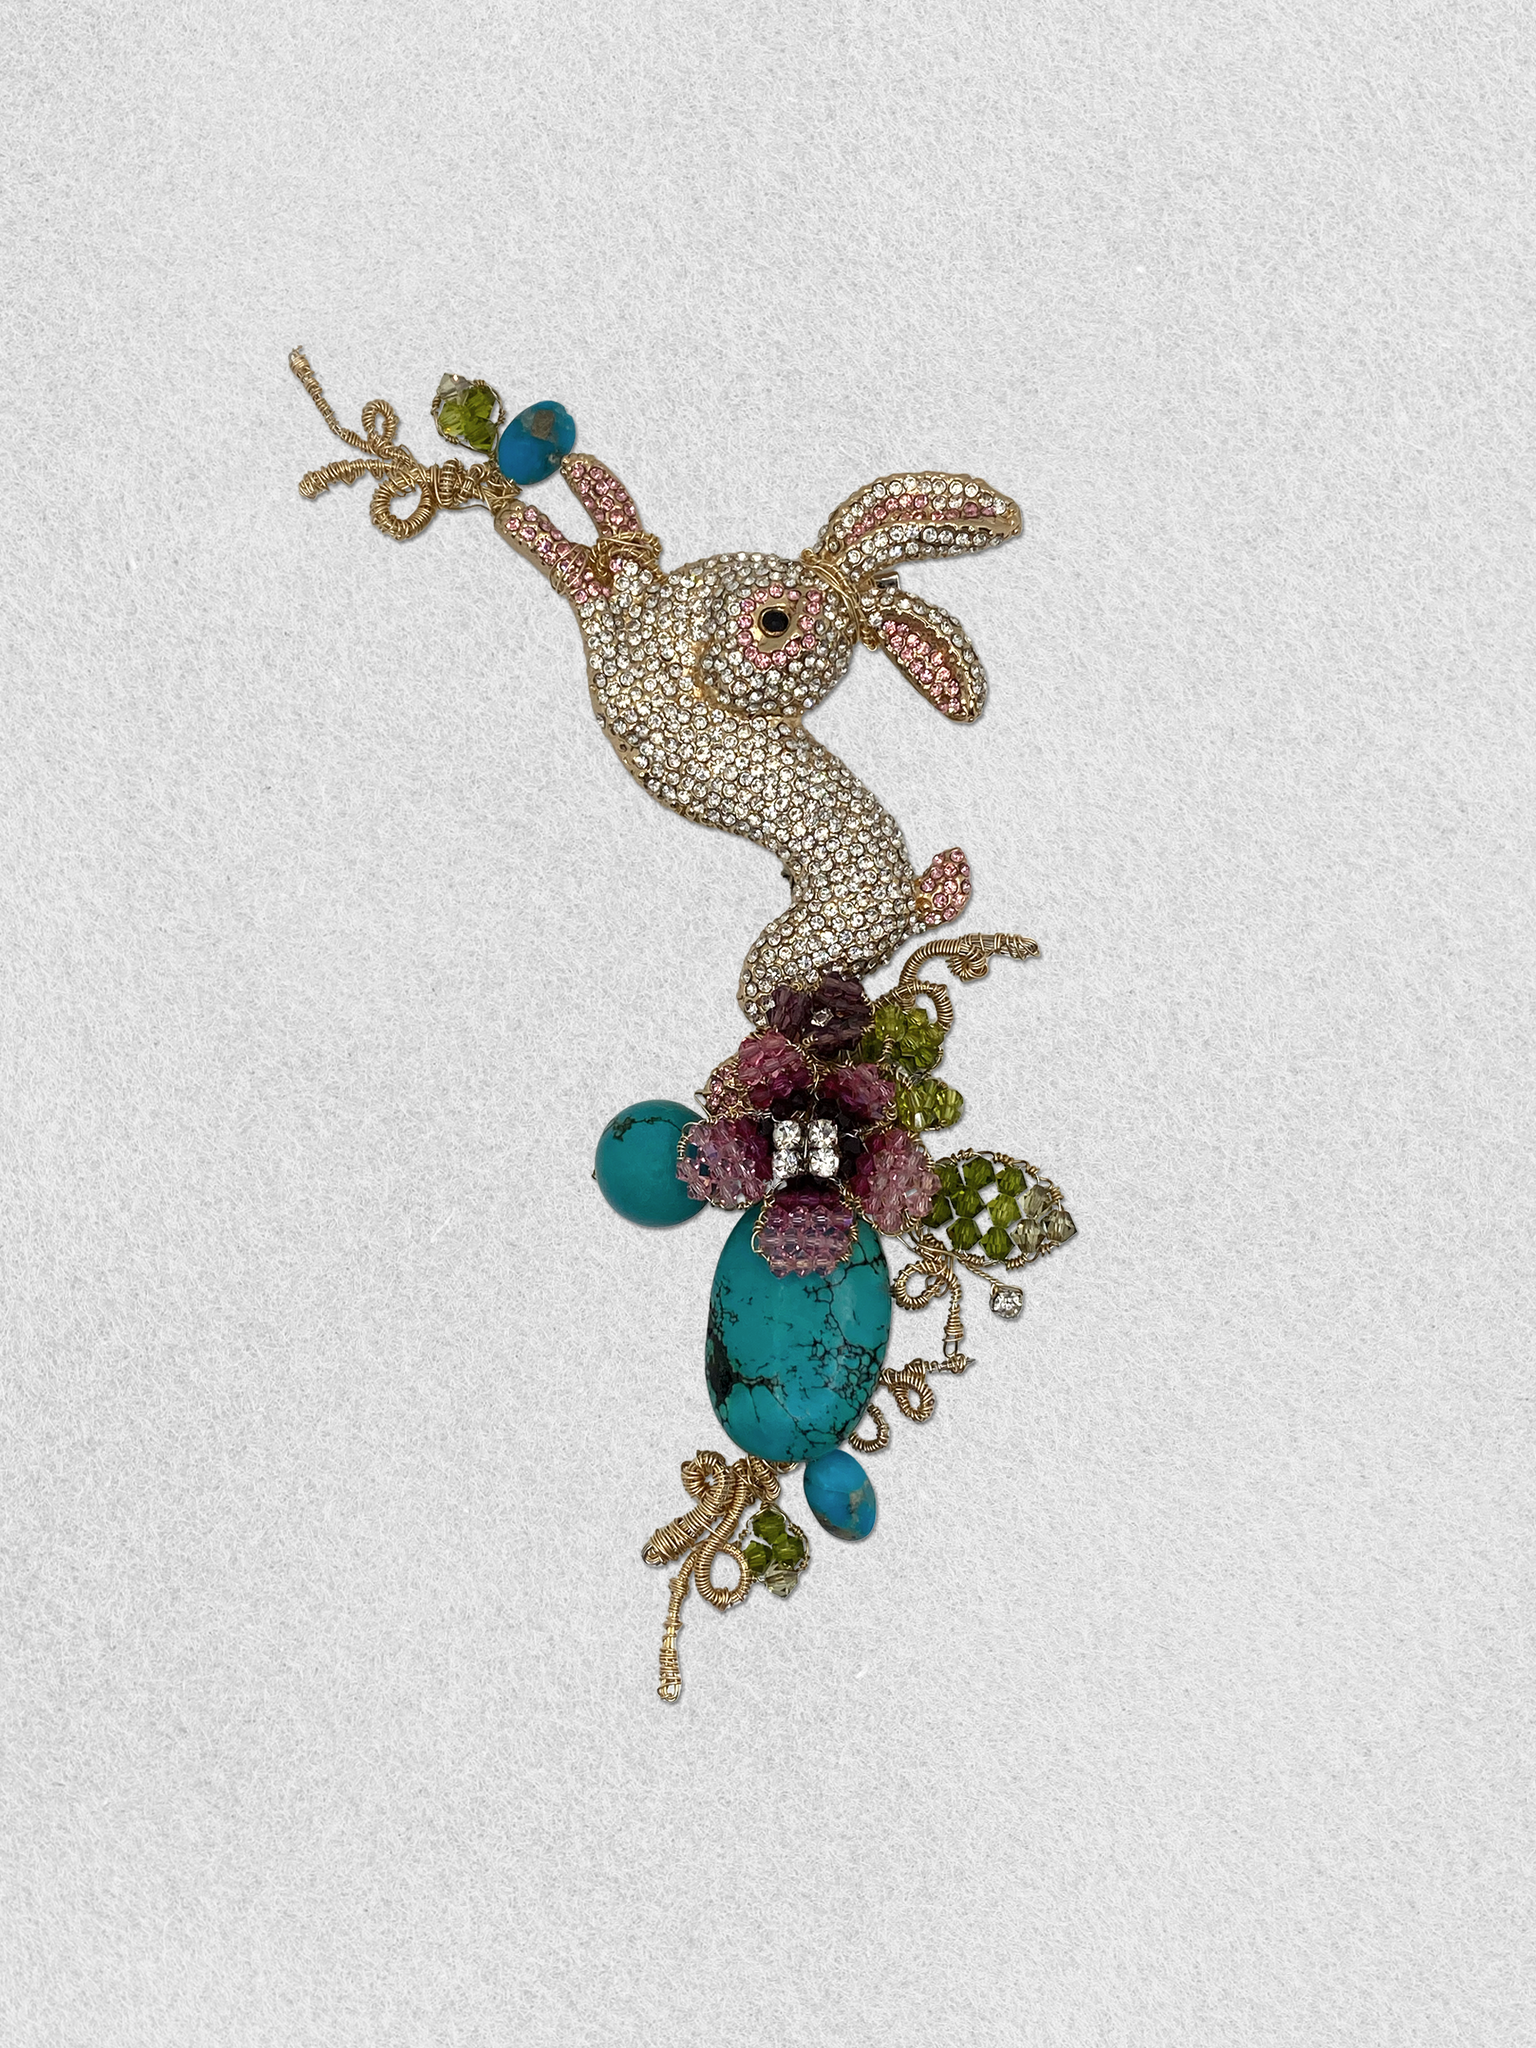 Men's Lapel Pin - Snowshoe Hare in Wonderland